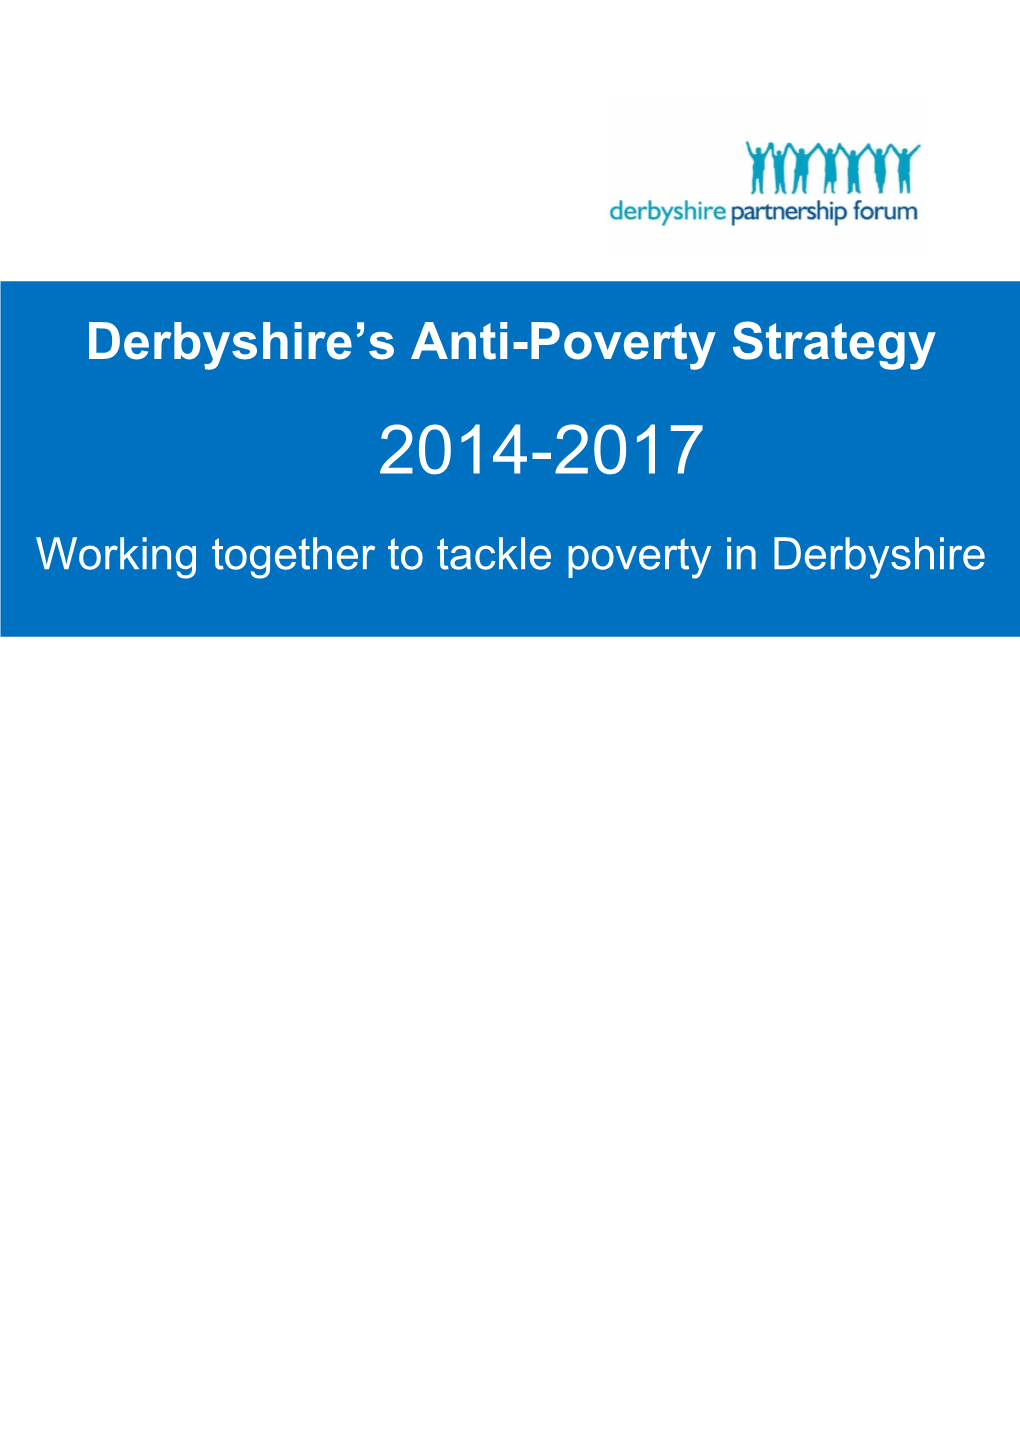 Derbyshire's Anti-Poverty Strategy 2014-2017